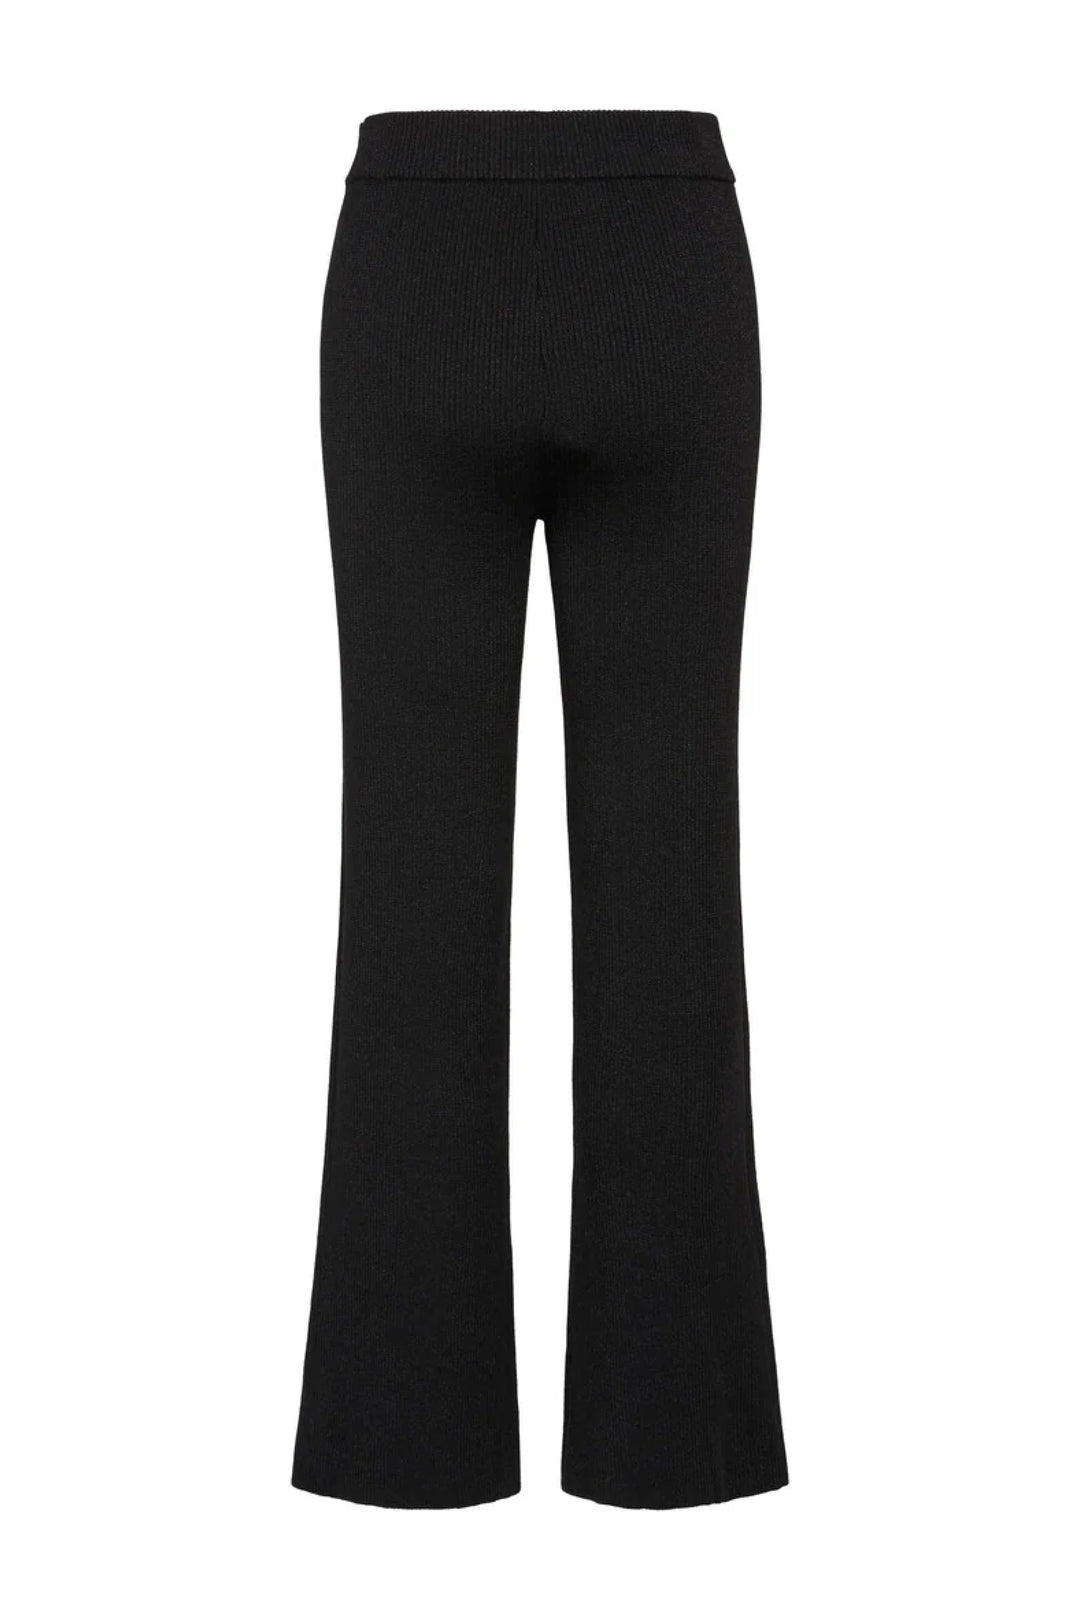 Bruuns Bazaar Women AnemonesBBLyna pants Pants Black / Black lurex